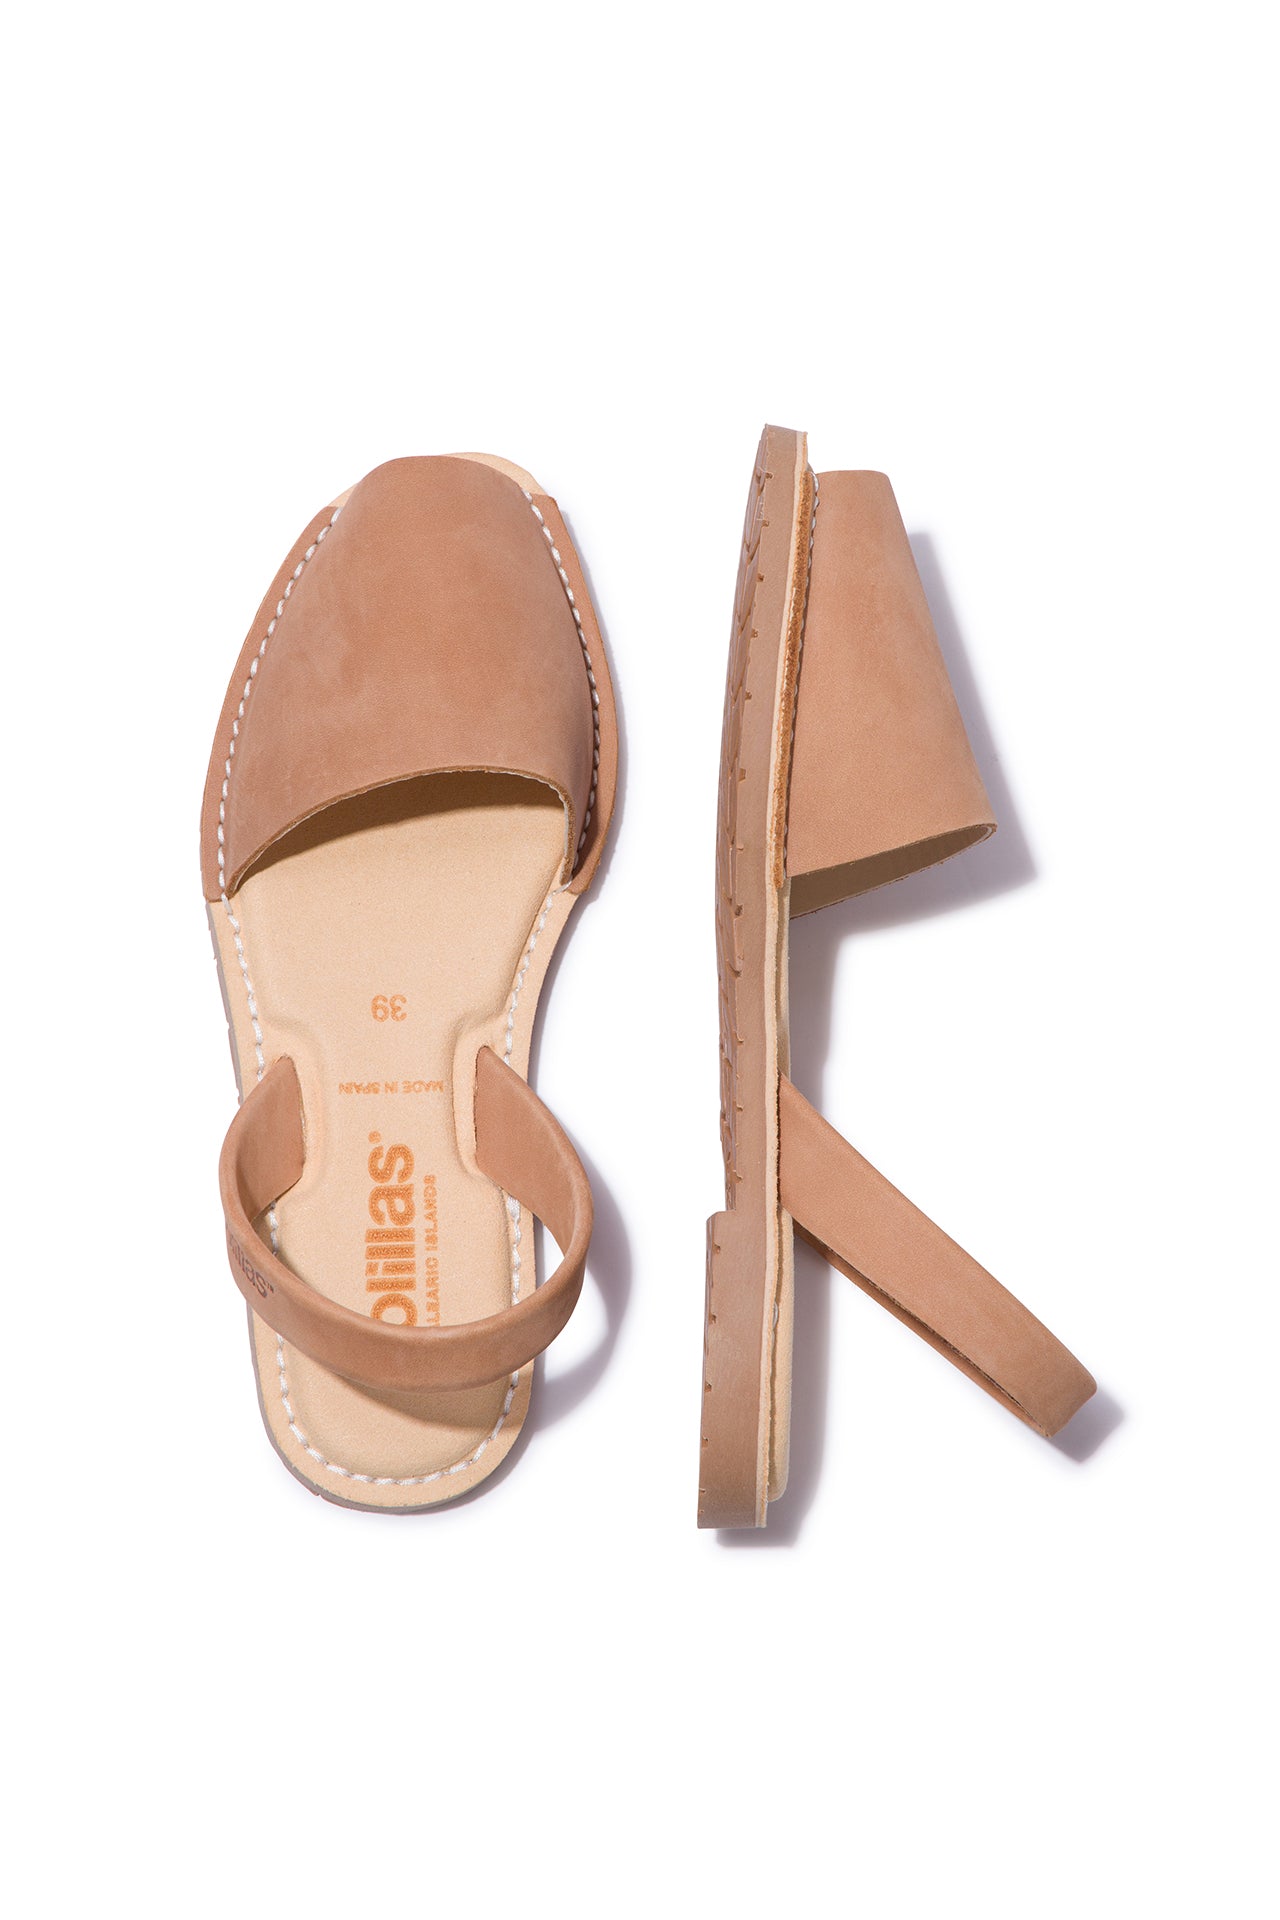 Cuero Mimoso - Original Menorcan Sandals in Tan Leather